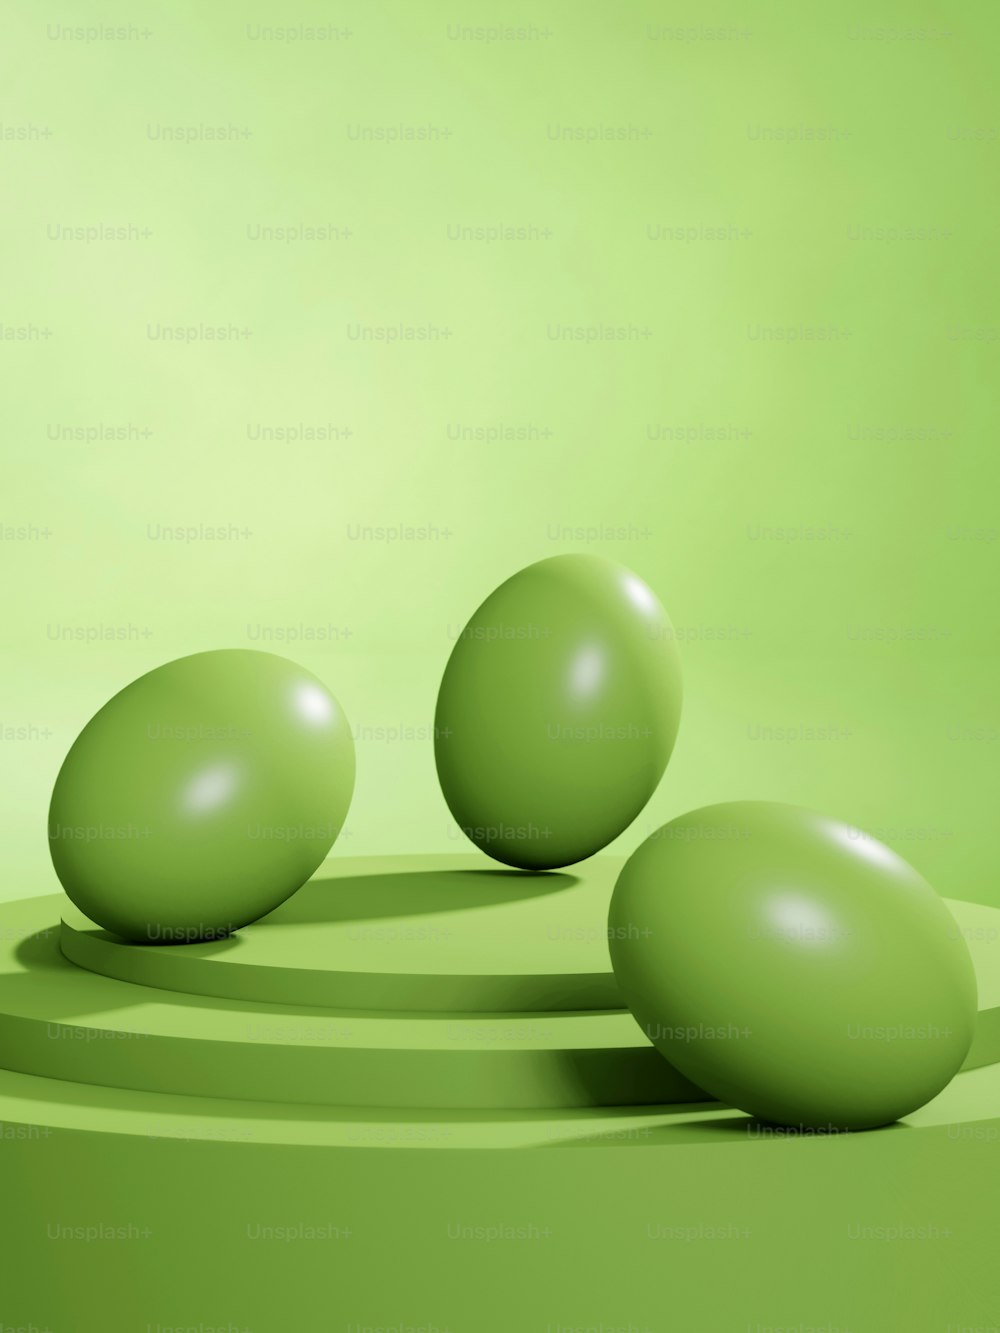 three green balls on a green surface